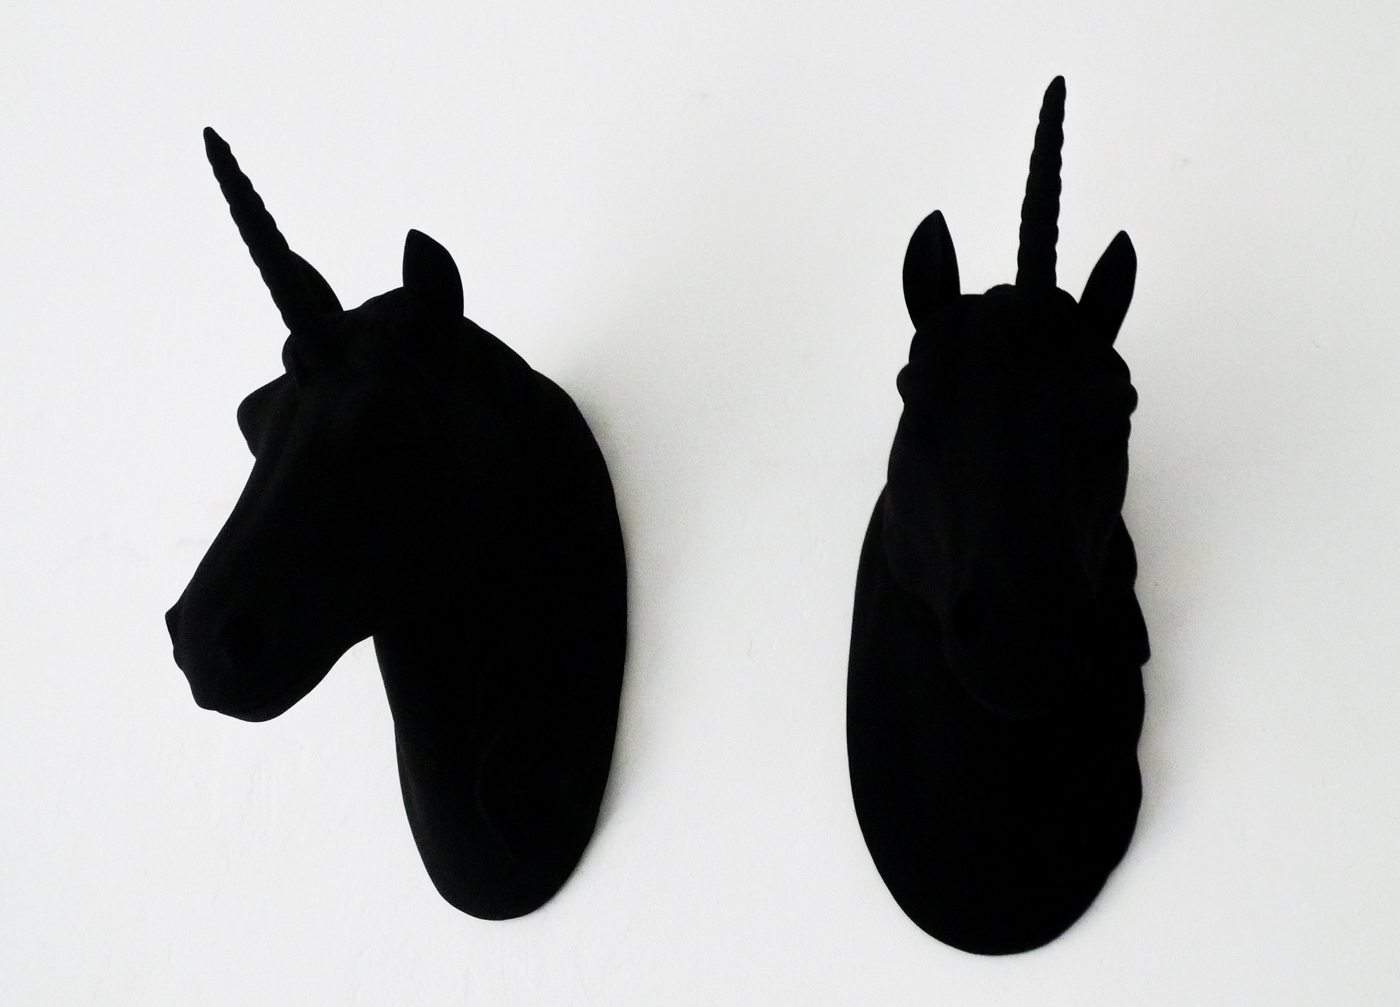 BLACK 2.0 - The world's mattest, flattest, black art material - Stuart  Semple: Official Homepage